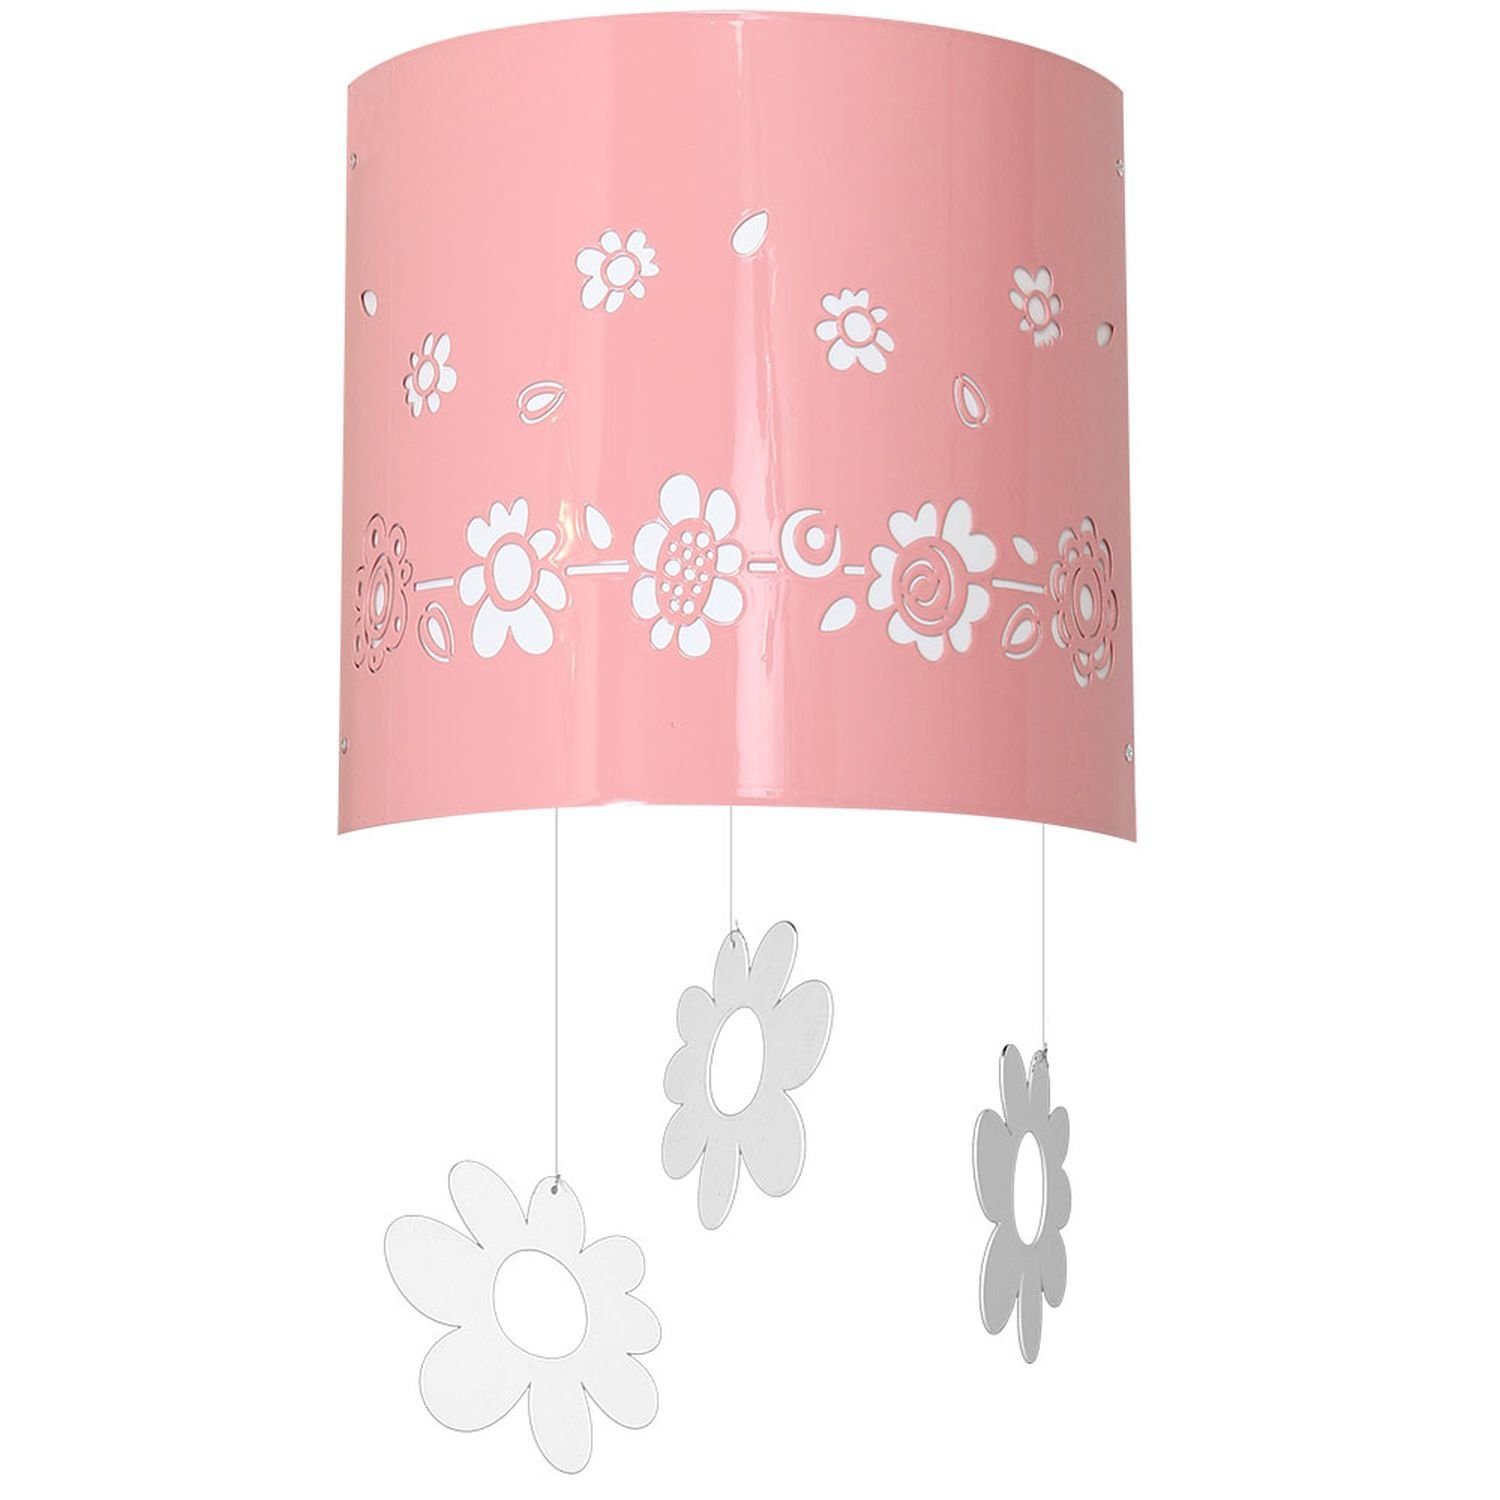 Metall Wand E14 Licht-Erlebnisse PERRY, Pink Kinderzimmerlampe Wandleuchte Leuchtmittel, ohne Wandleuchte